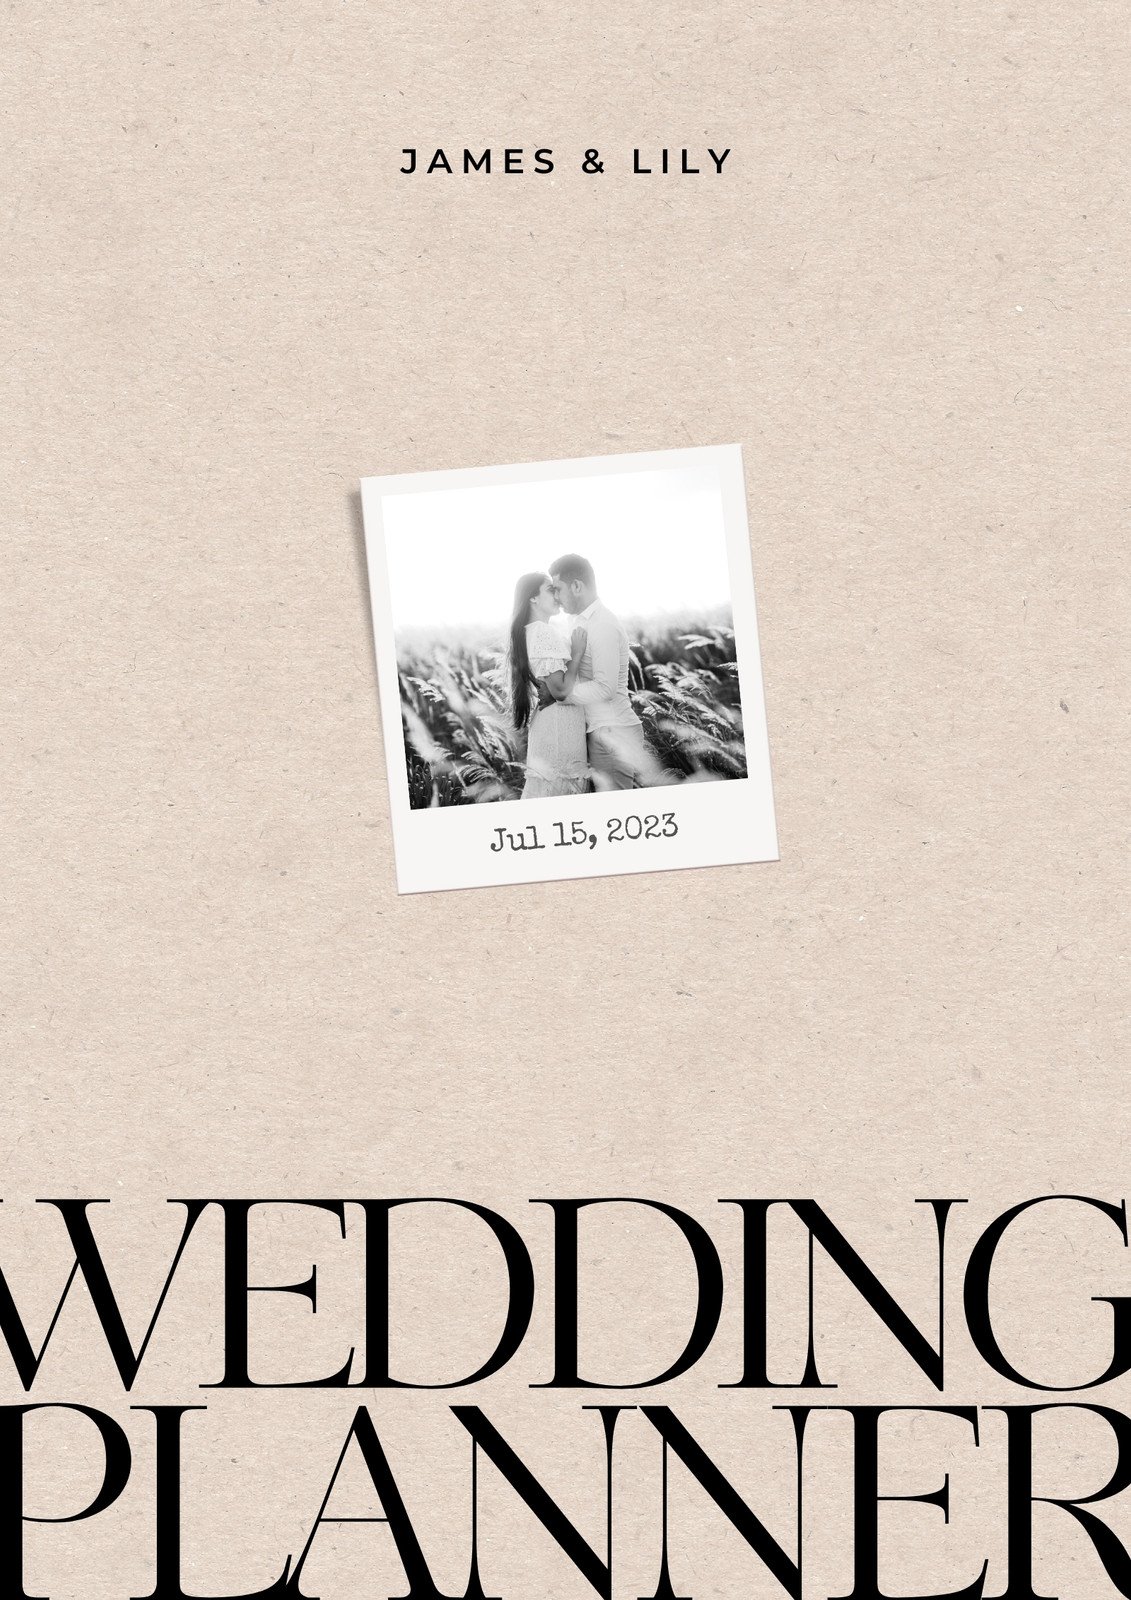 Neutral Paper Cardboard Wedding Planner Cover Design A4 Document